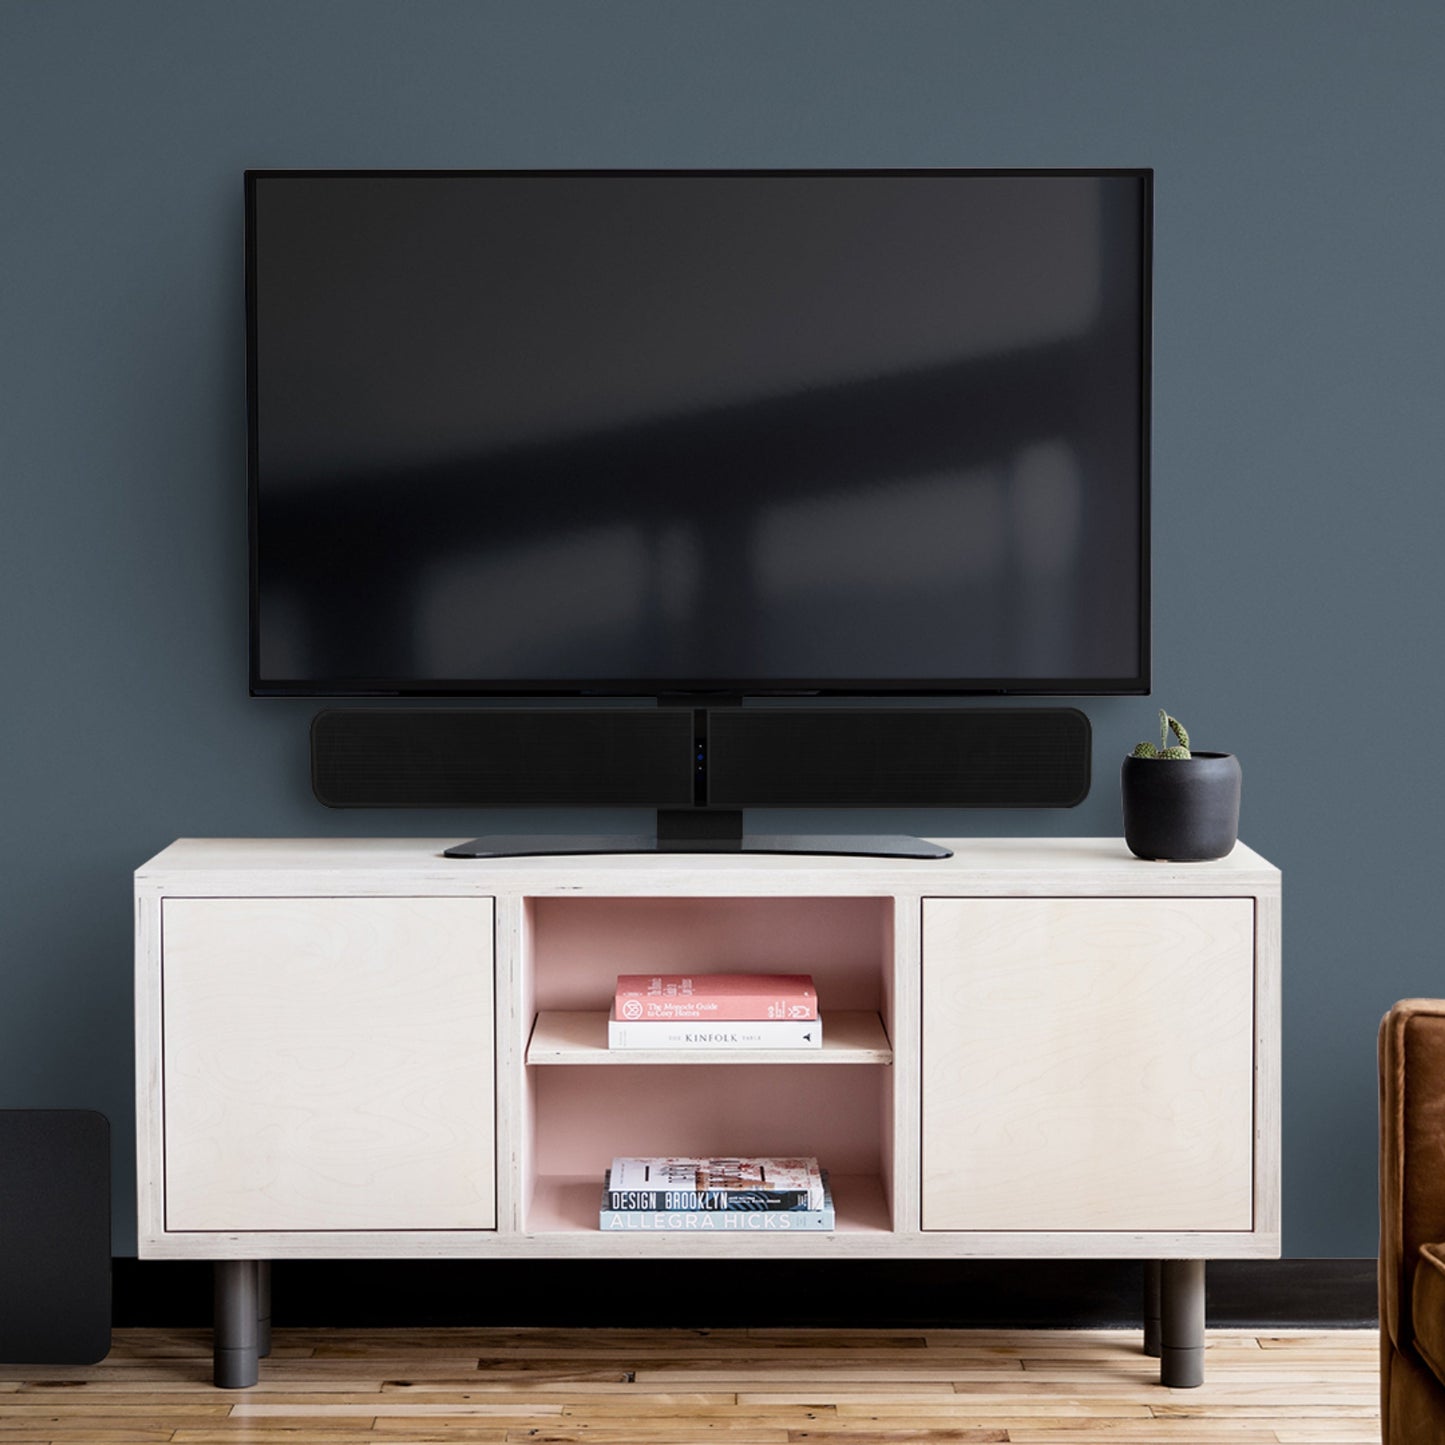 Bluesound Pulse Soundbar TV Stand installed in living room